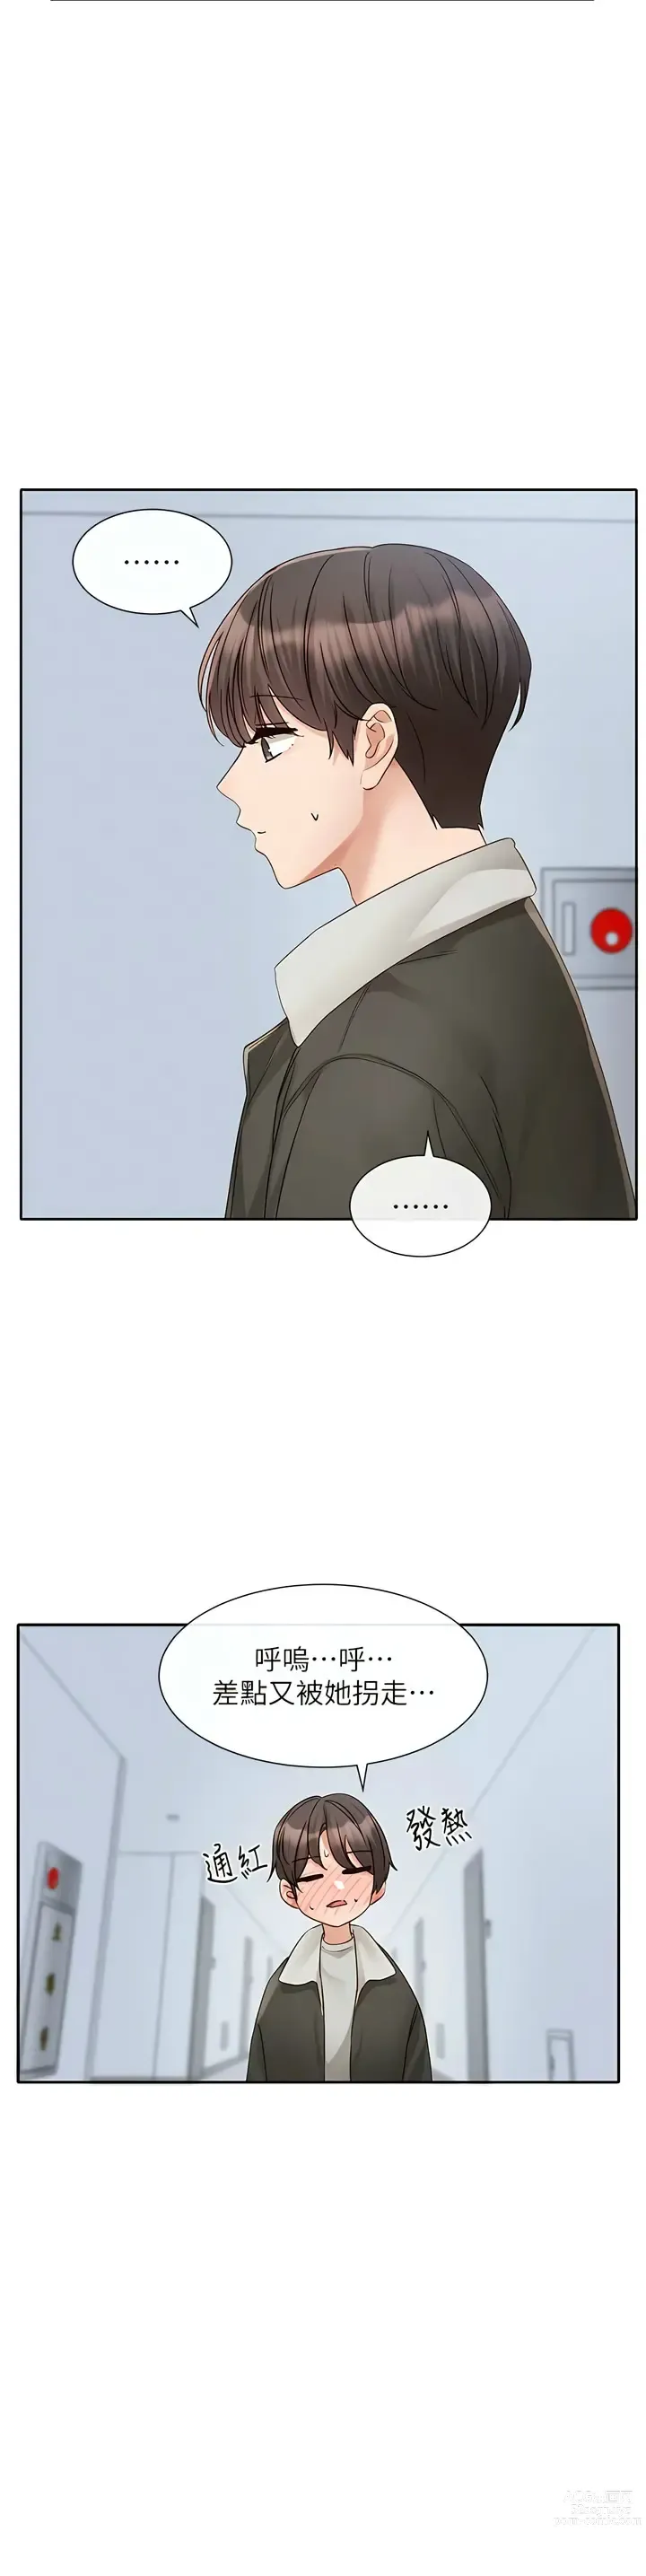 Page 11 of manga 社团学姐/Circles 151-159